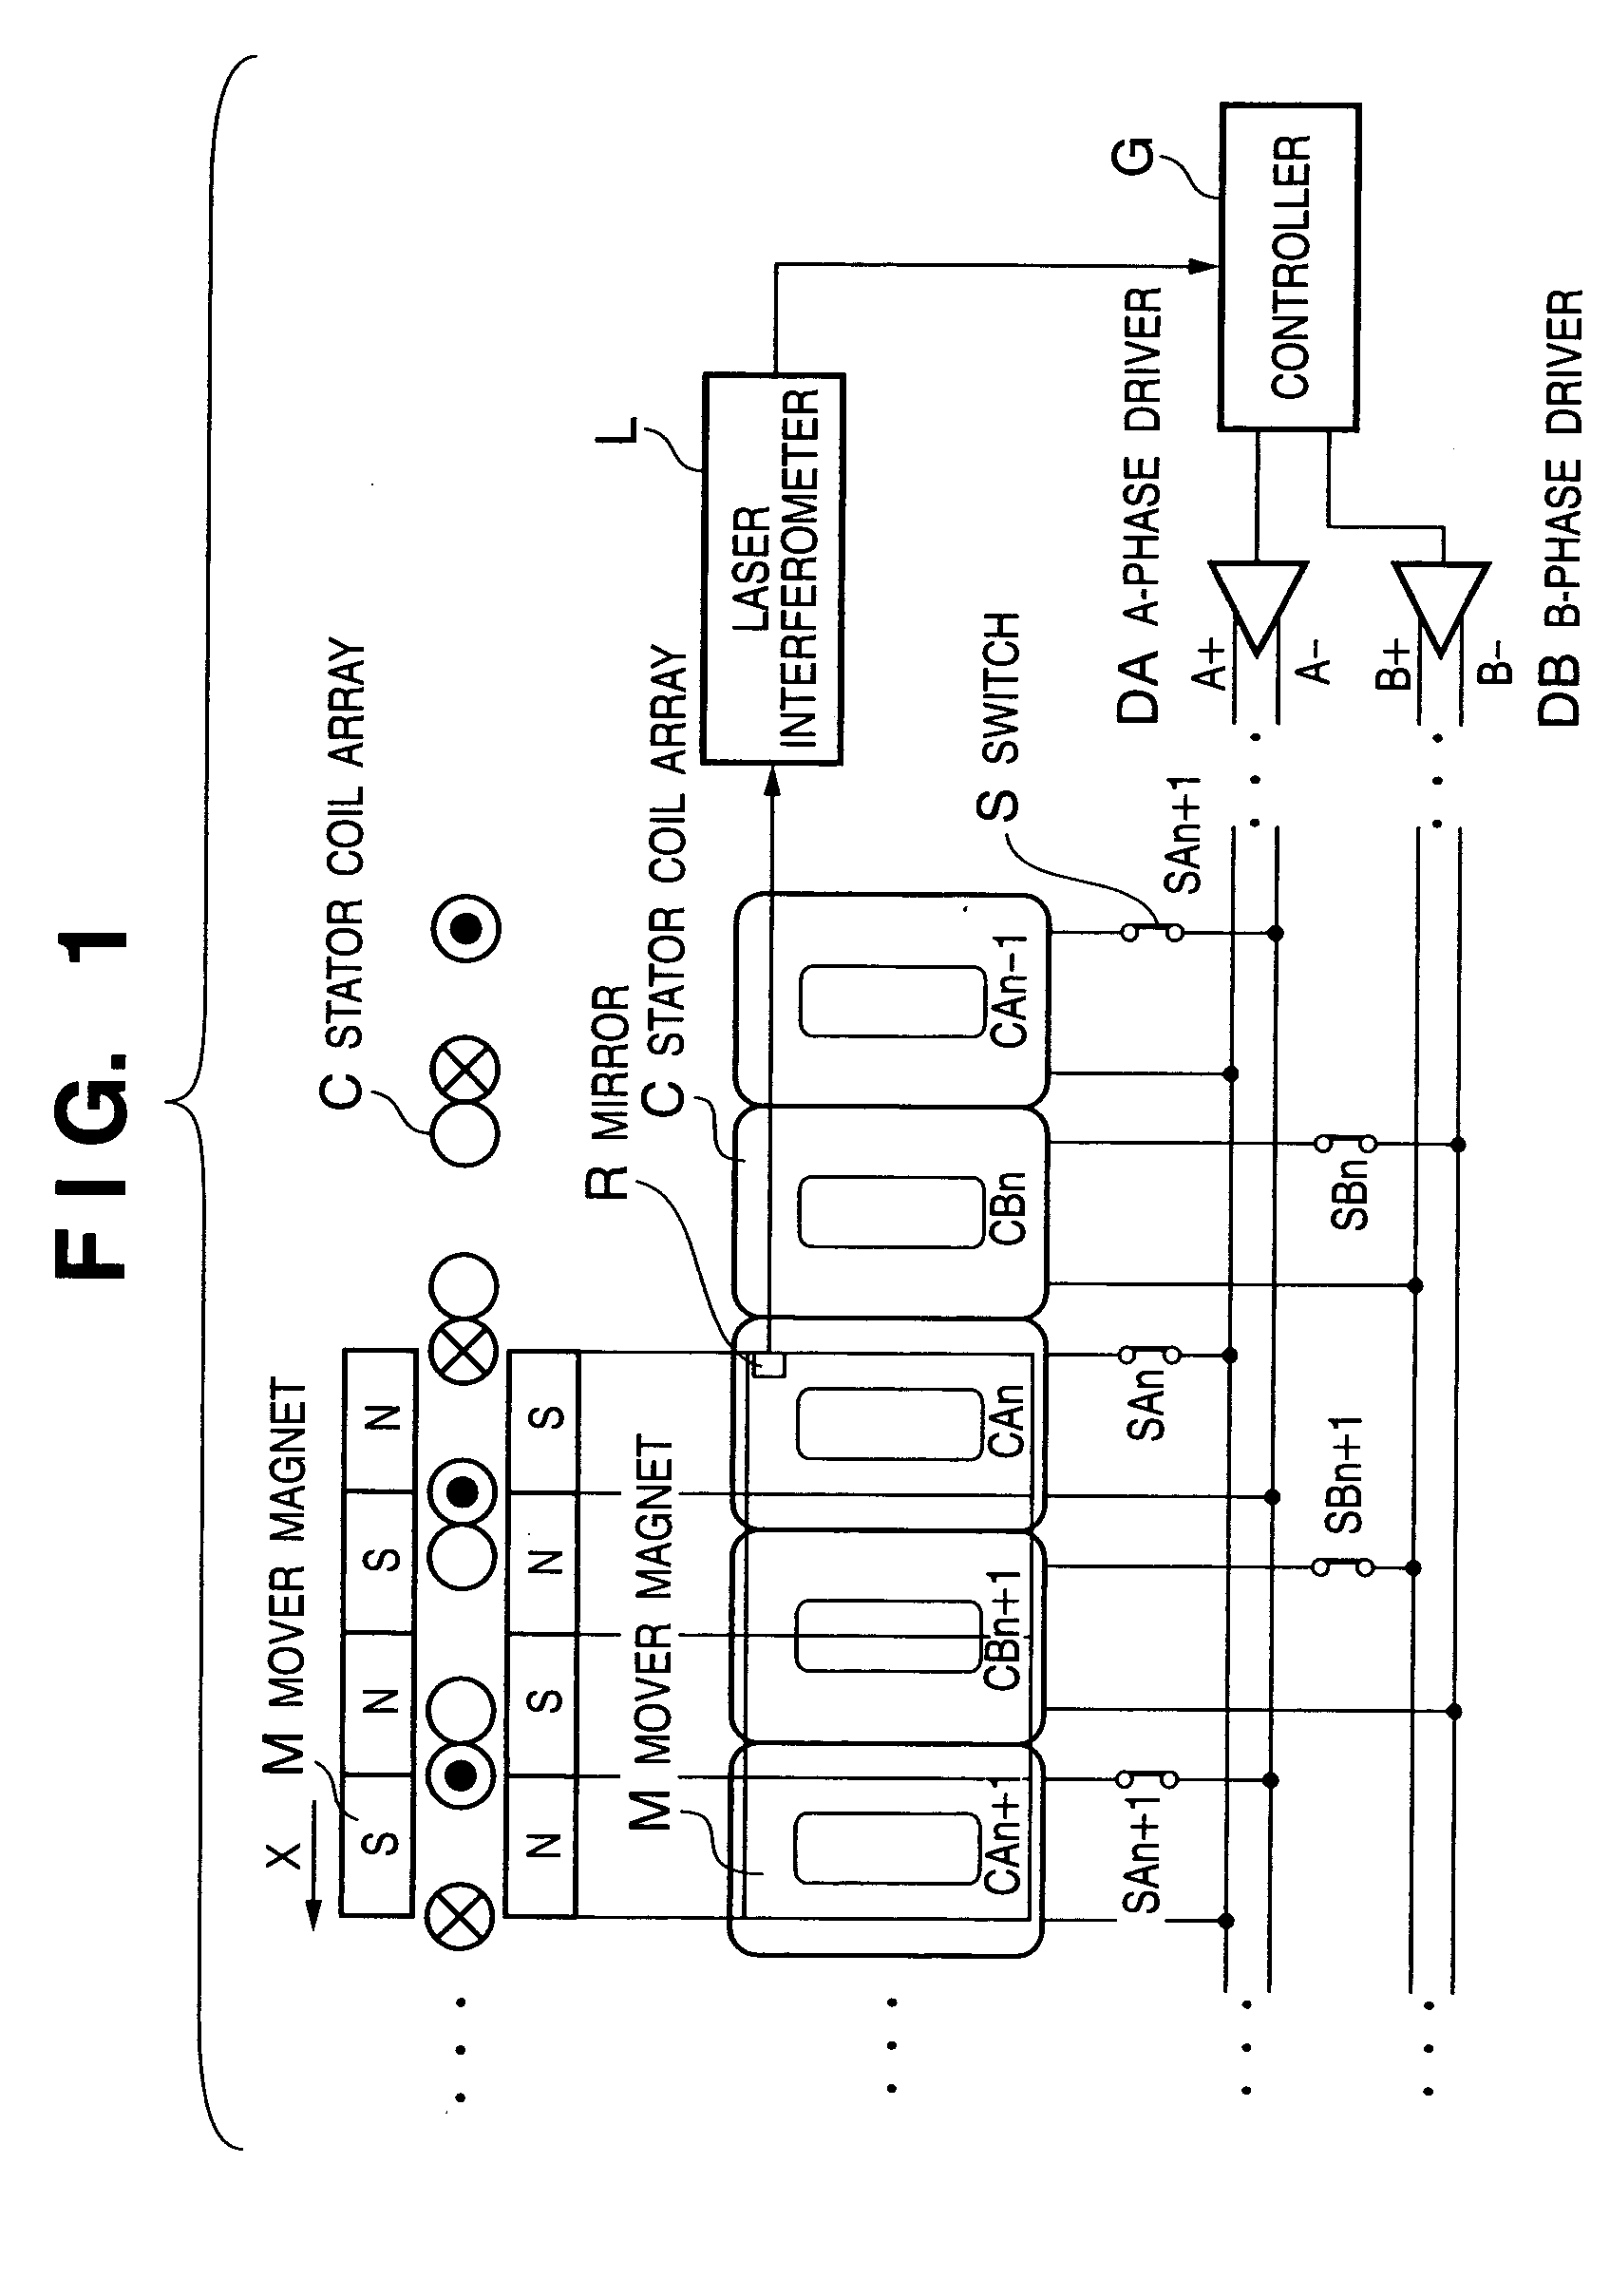 Linear motor apparatus